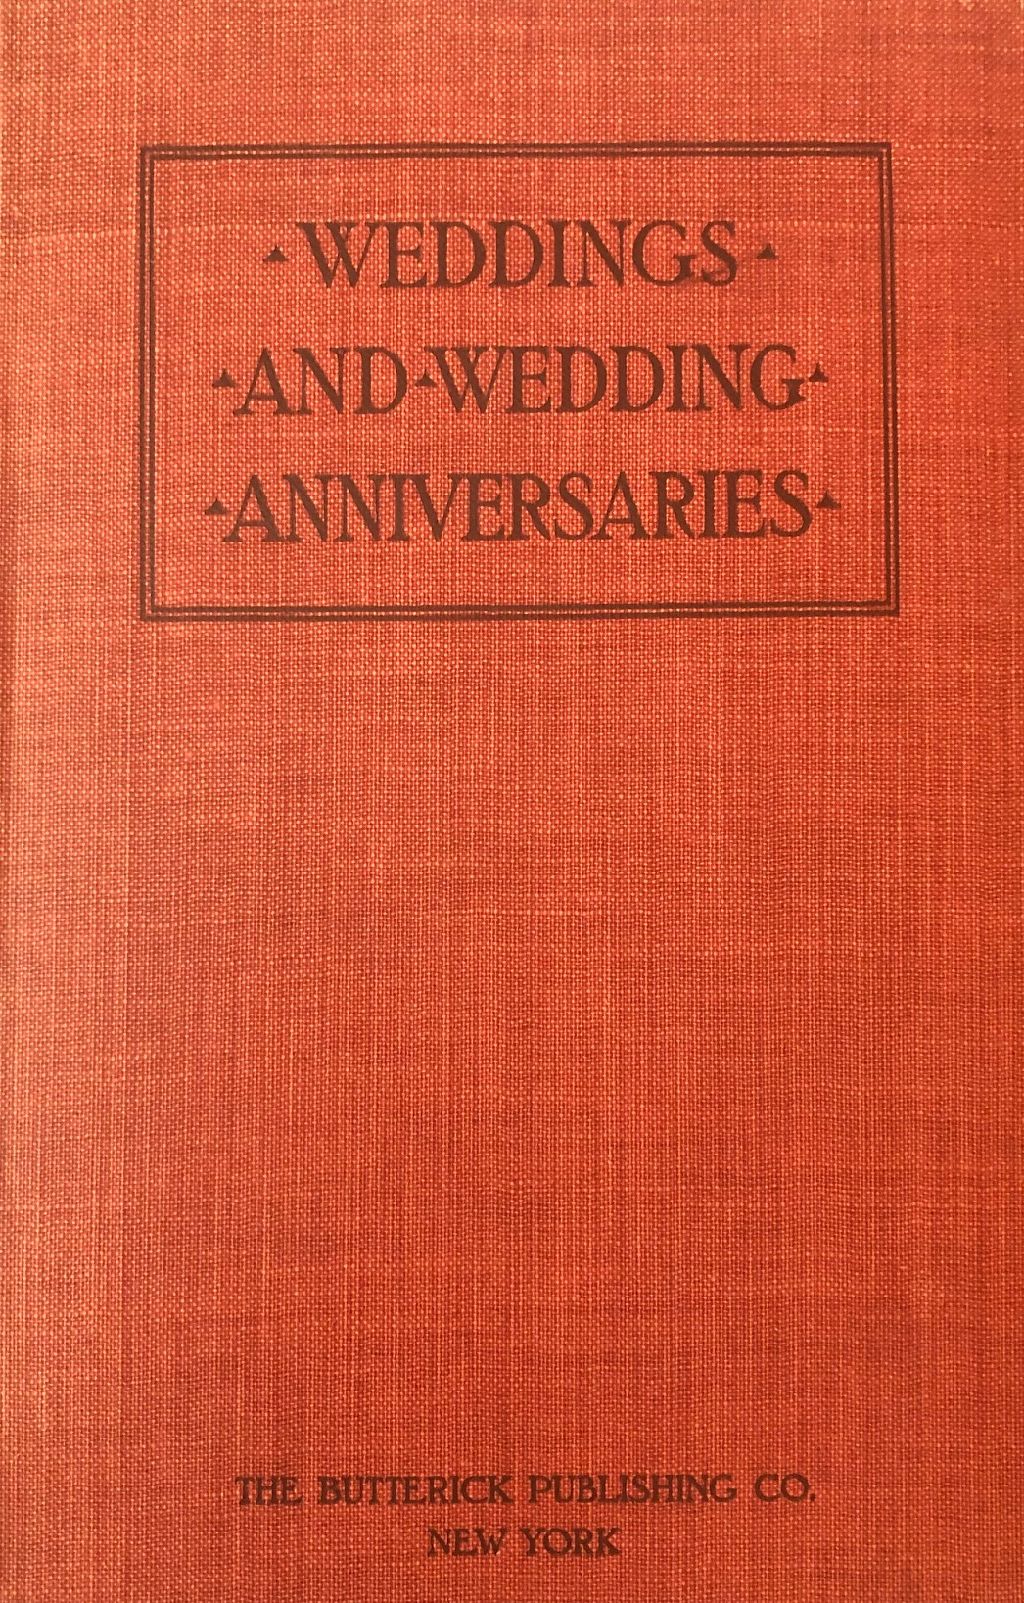 (Etiquette) Jean Wilde Clark. Weddings and Wedding Anniversaries